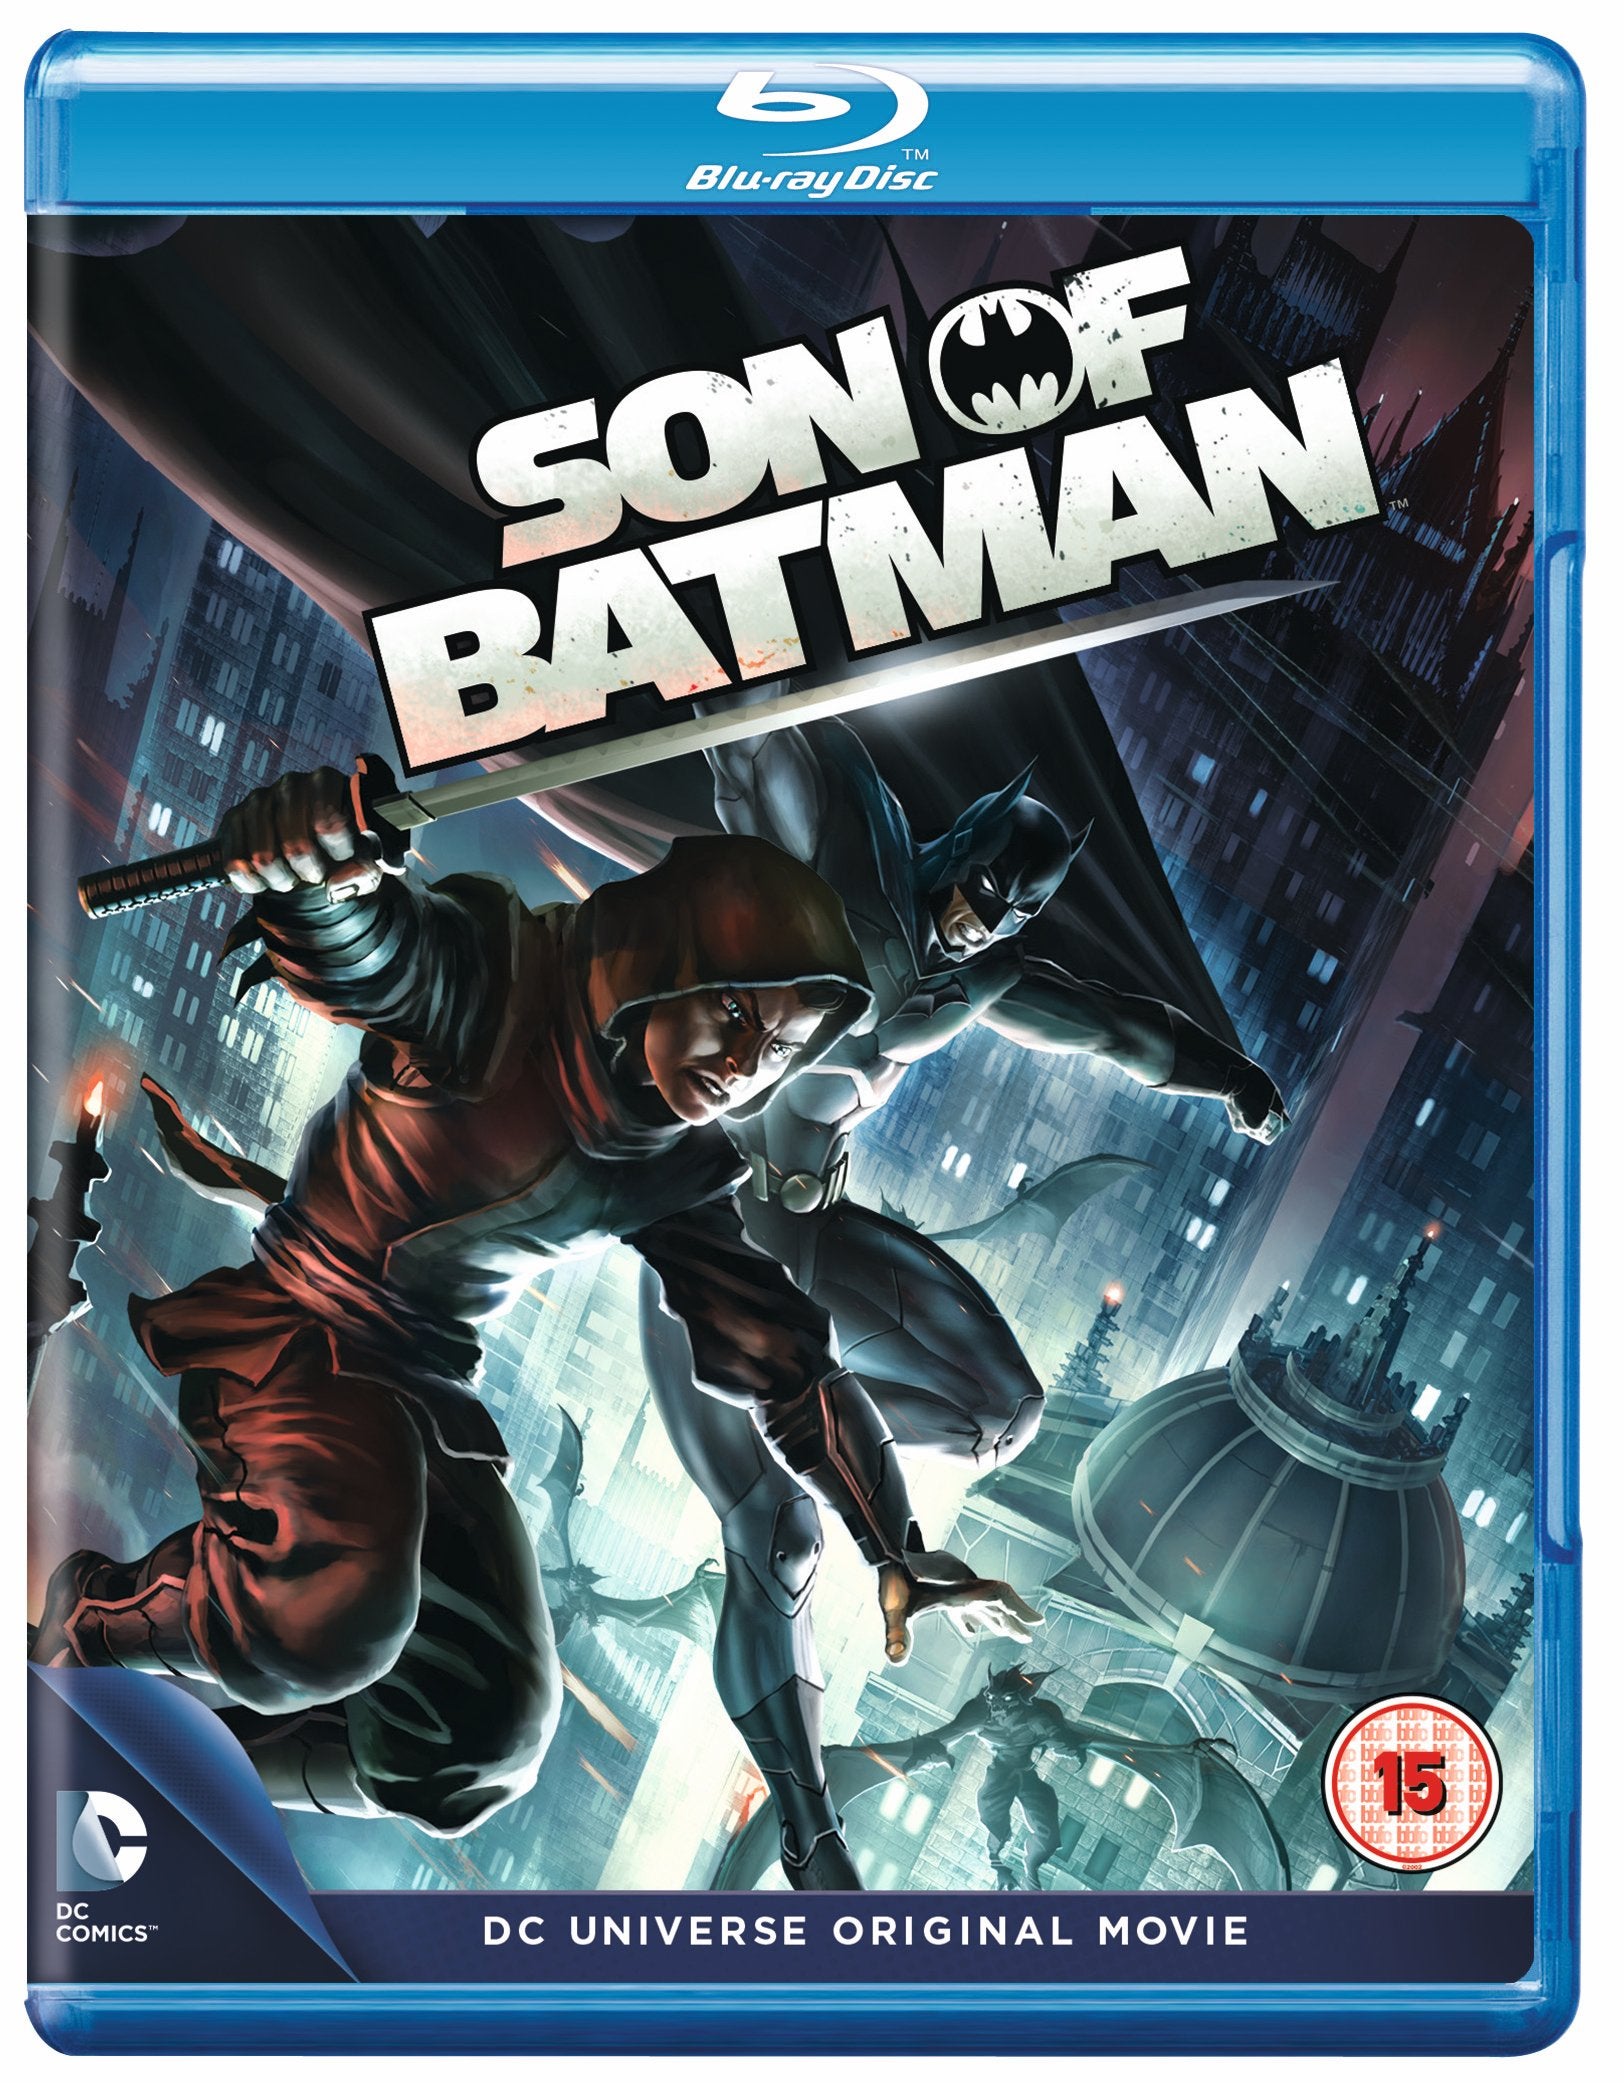 son of batman dvd cover